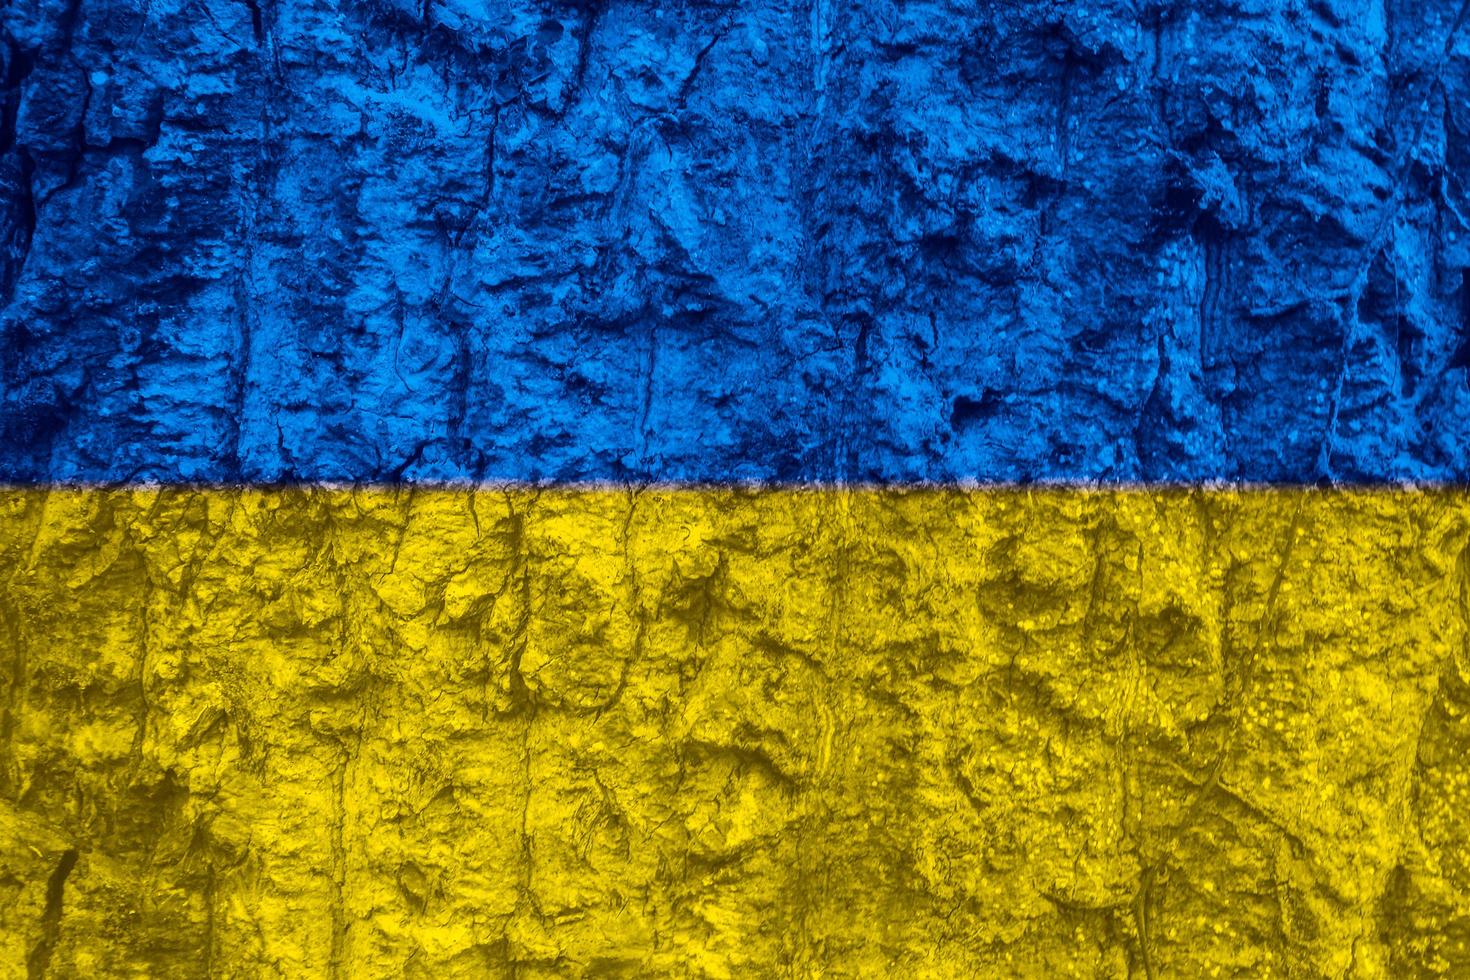 ukraine flag texture as background photo